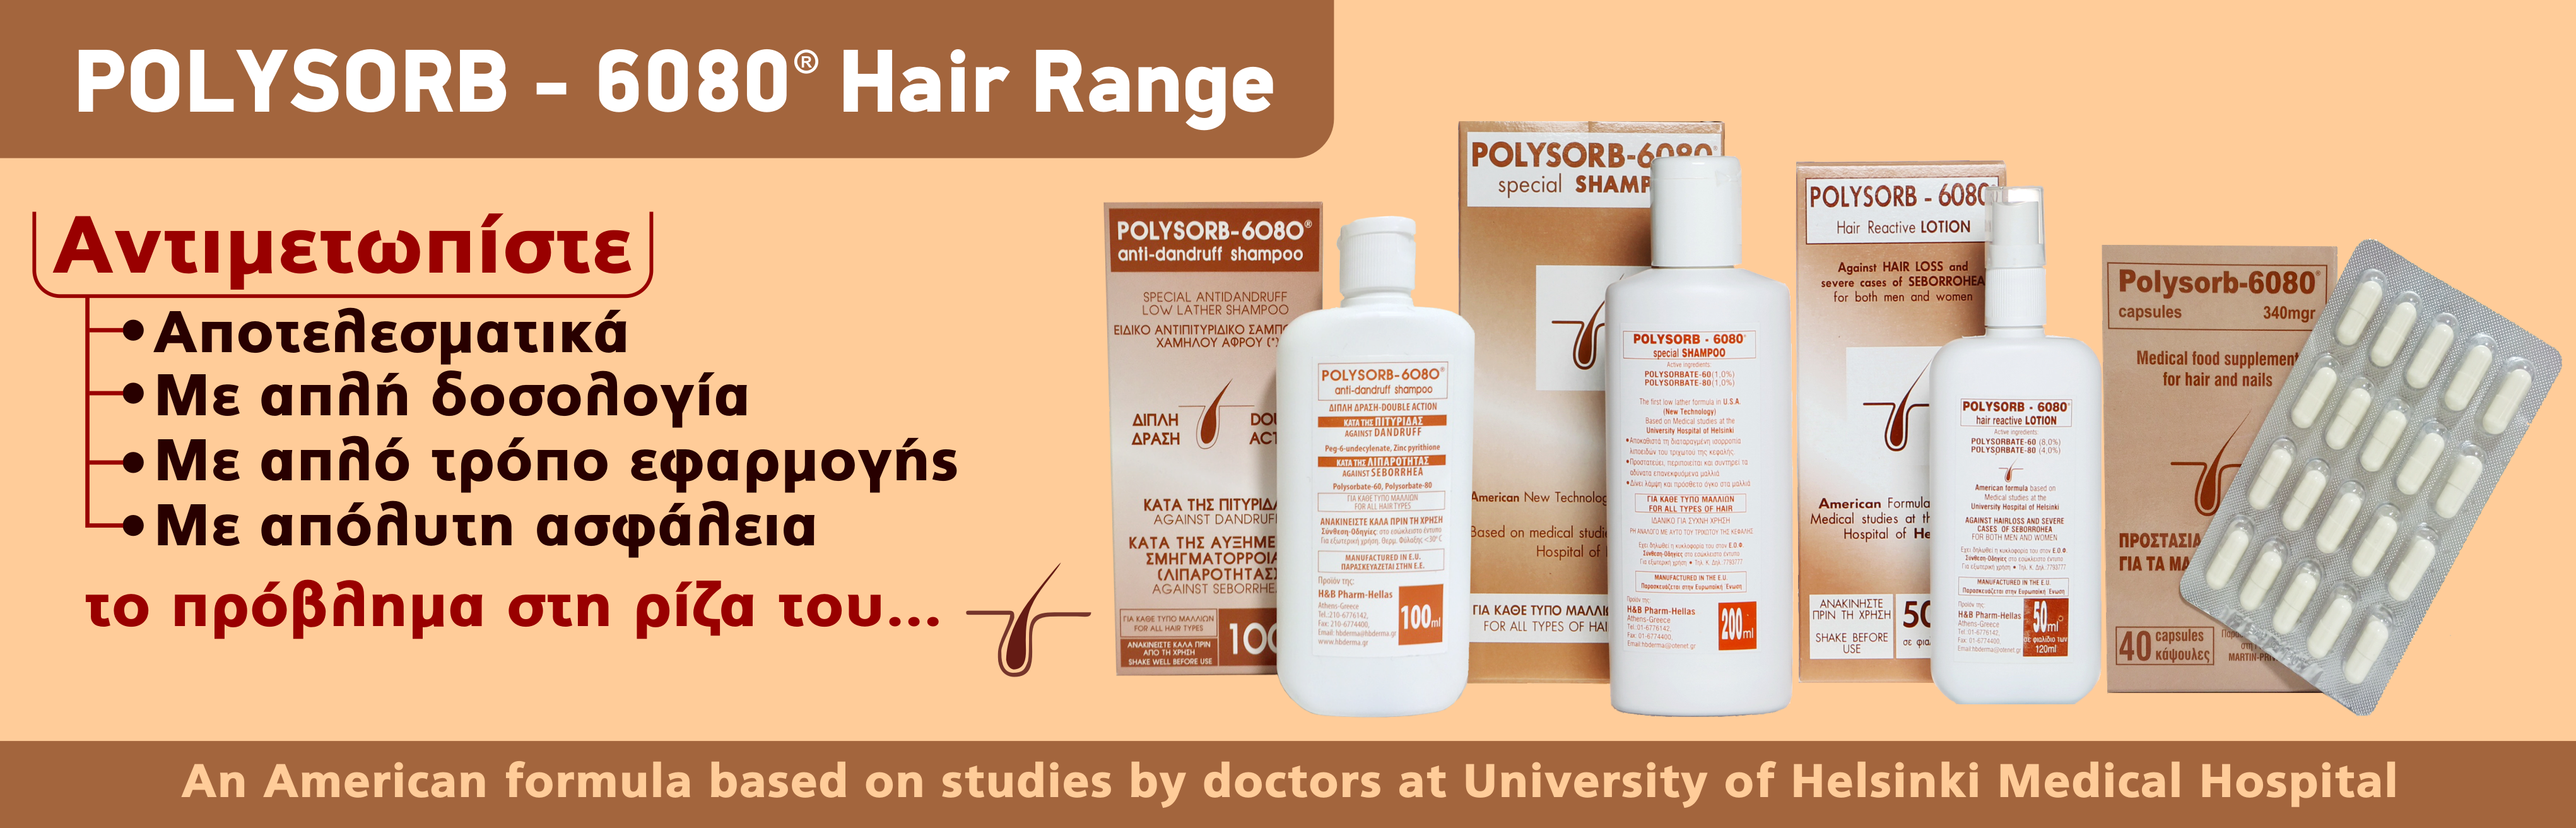 Polysorb Hair Range